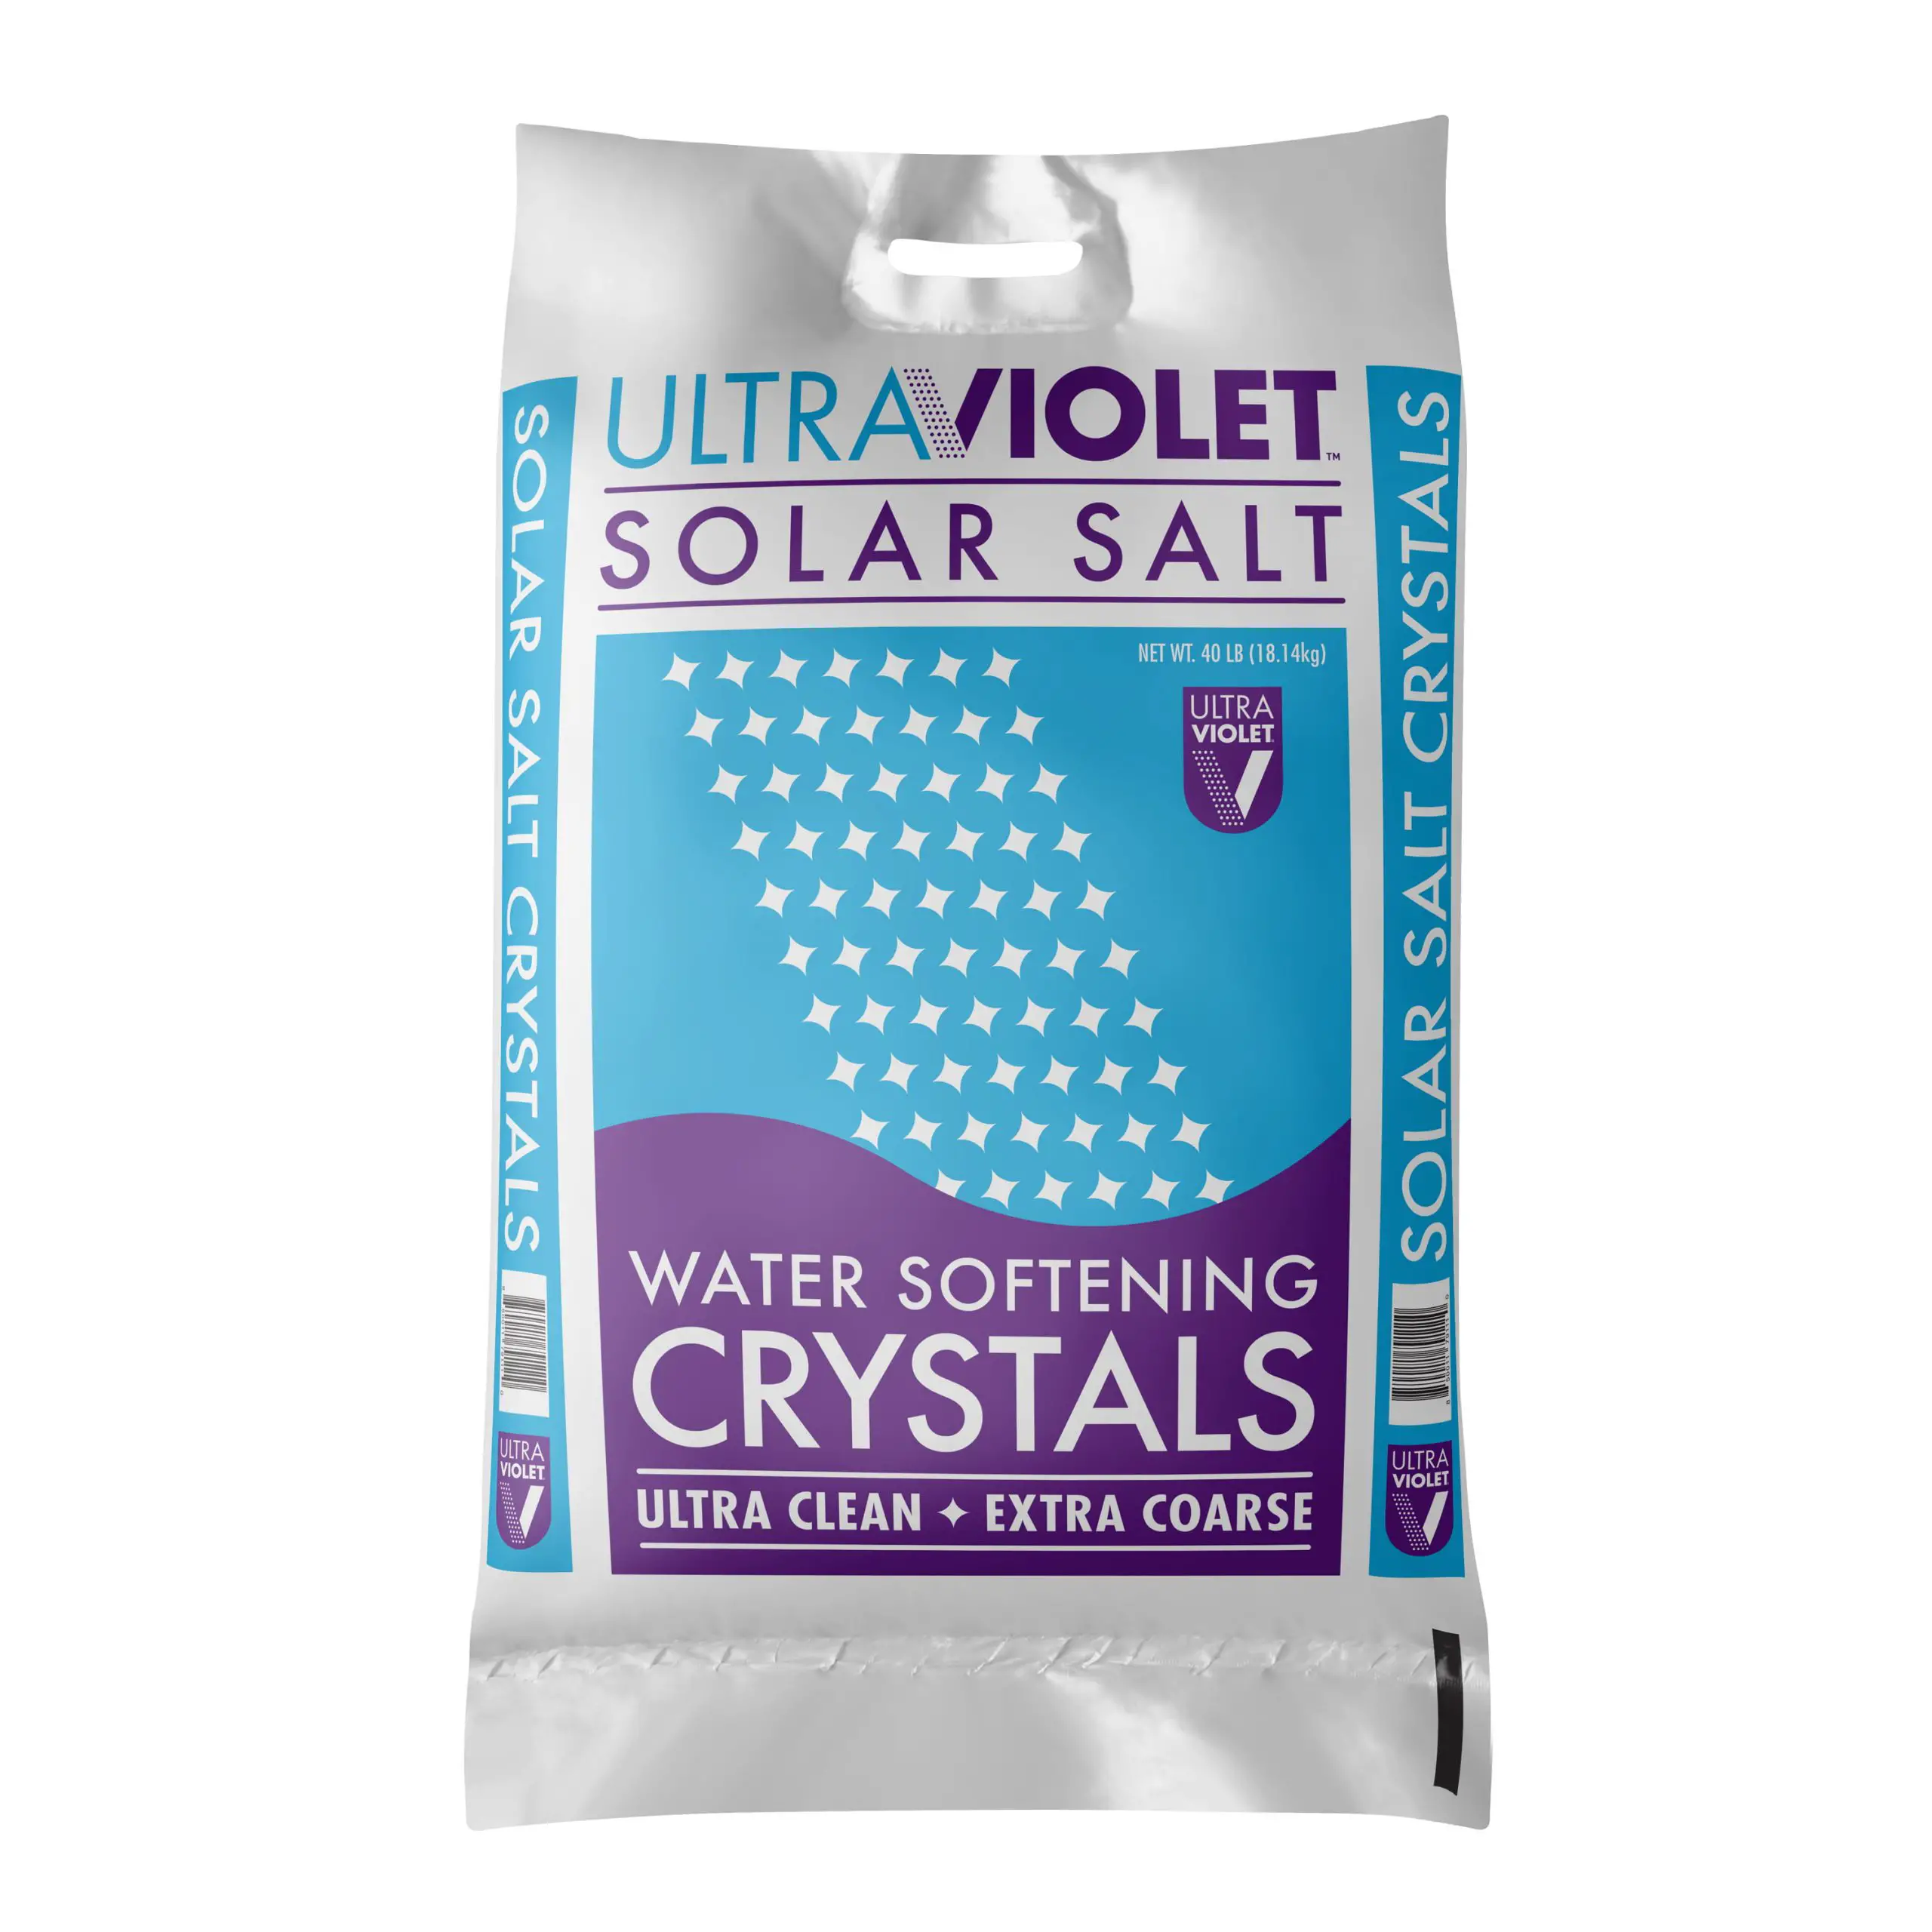 Ultraviolet Solar Salt Water Softening Crystals, Ultra Clean